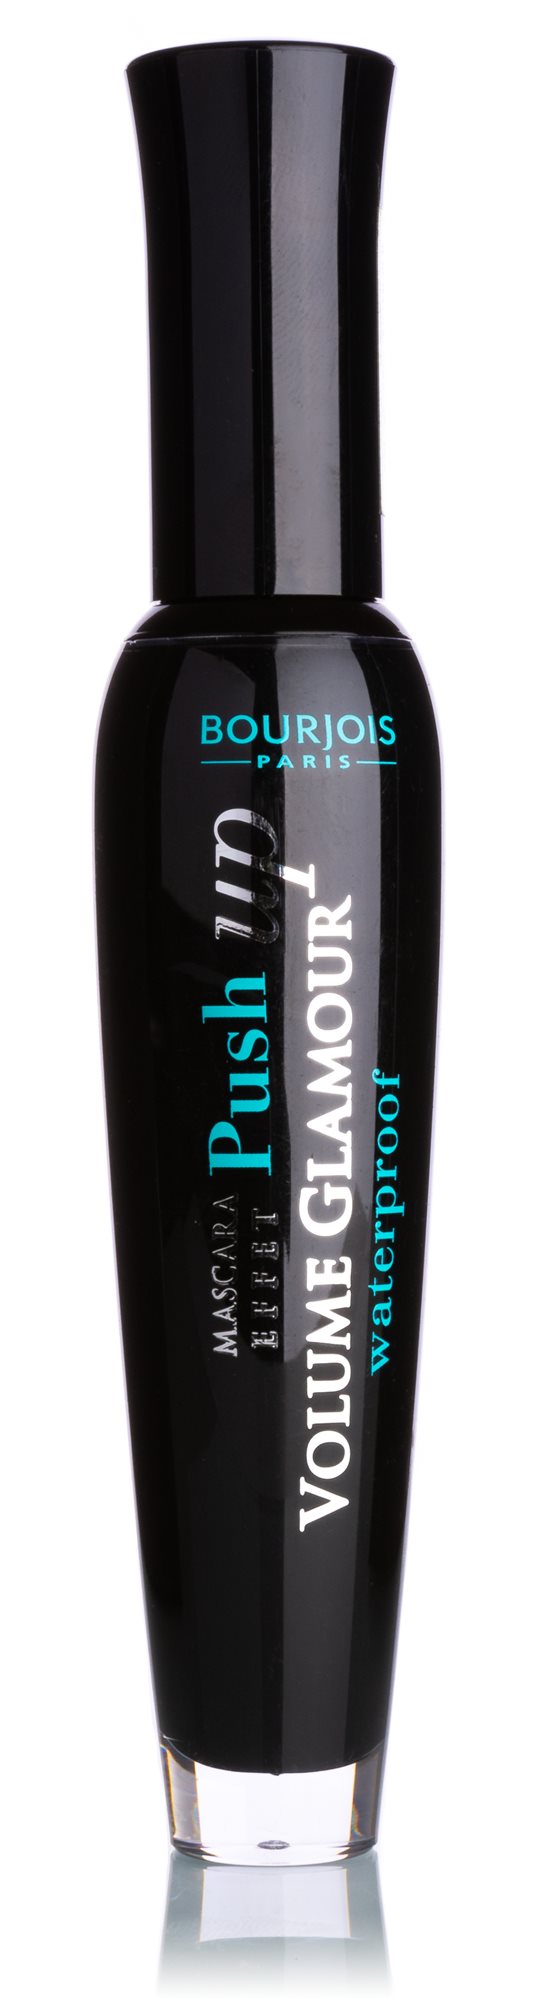 BOURJOIS Mascara Push Up Volume Glamour 71 Waterproof Black 7 ml